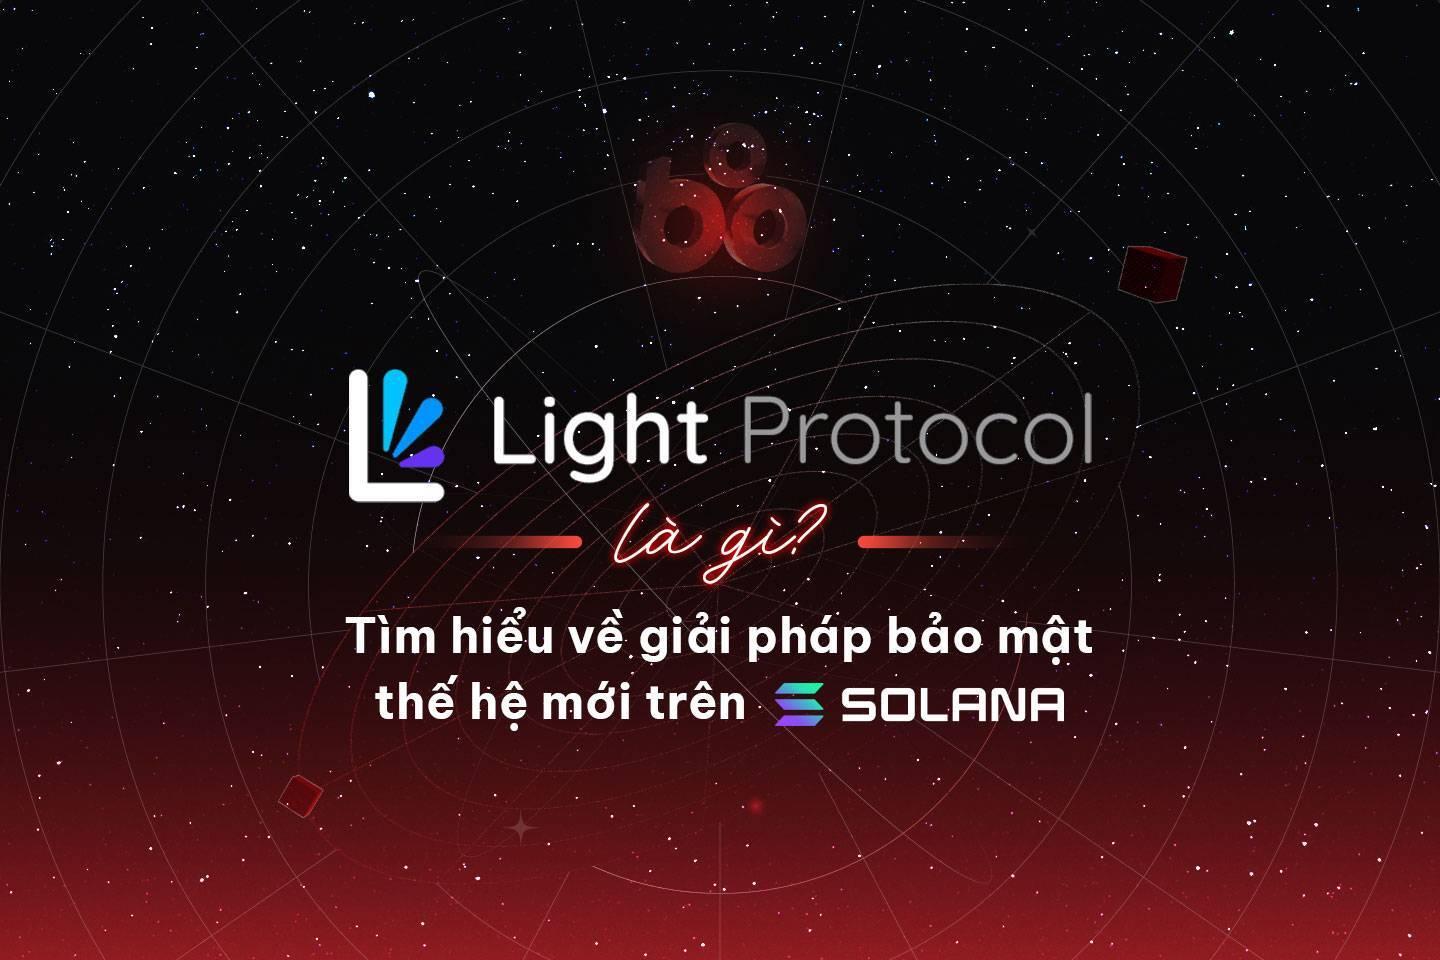 light-protocol-la-gi-tim-hieu-ve-giai-phap-bao-mat-the-he-moi-tren-solana